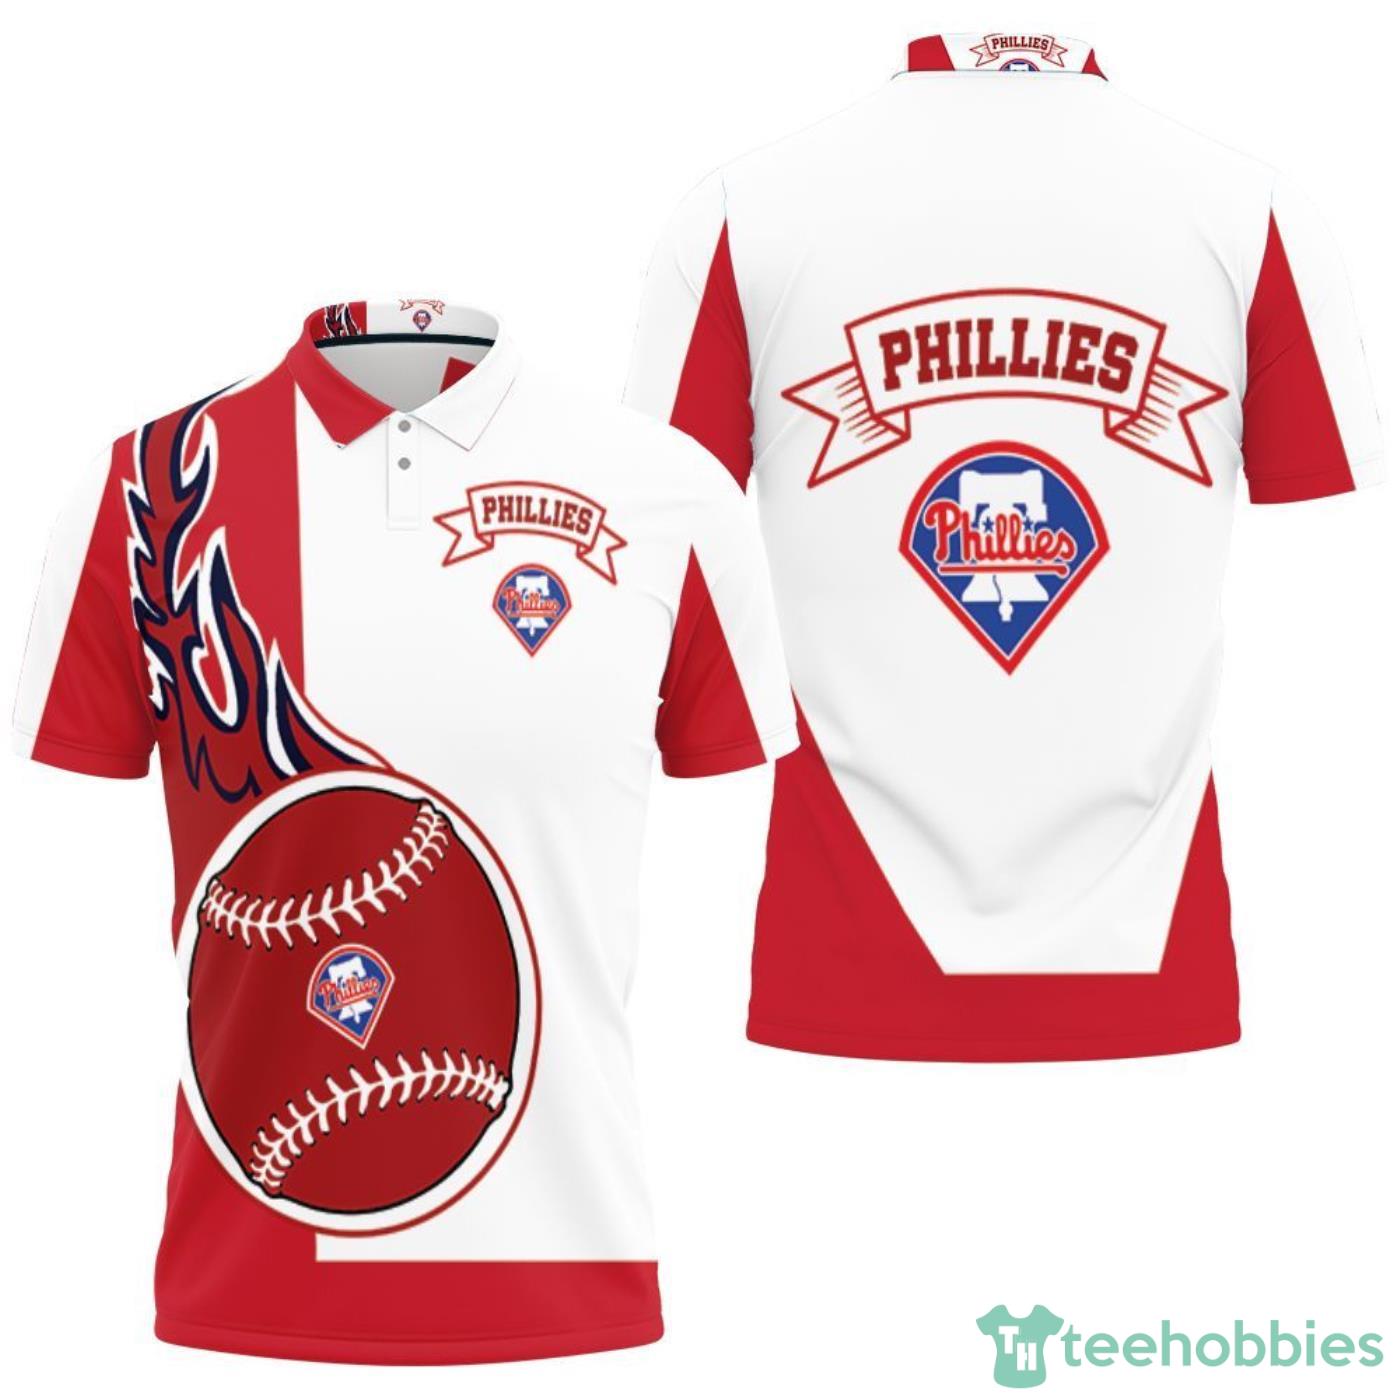 Philadelphia Phillies 3D Polo Shirt For Fans Product Photo 1